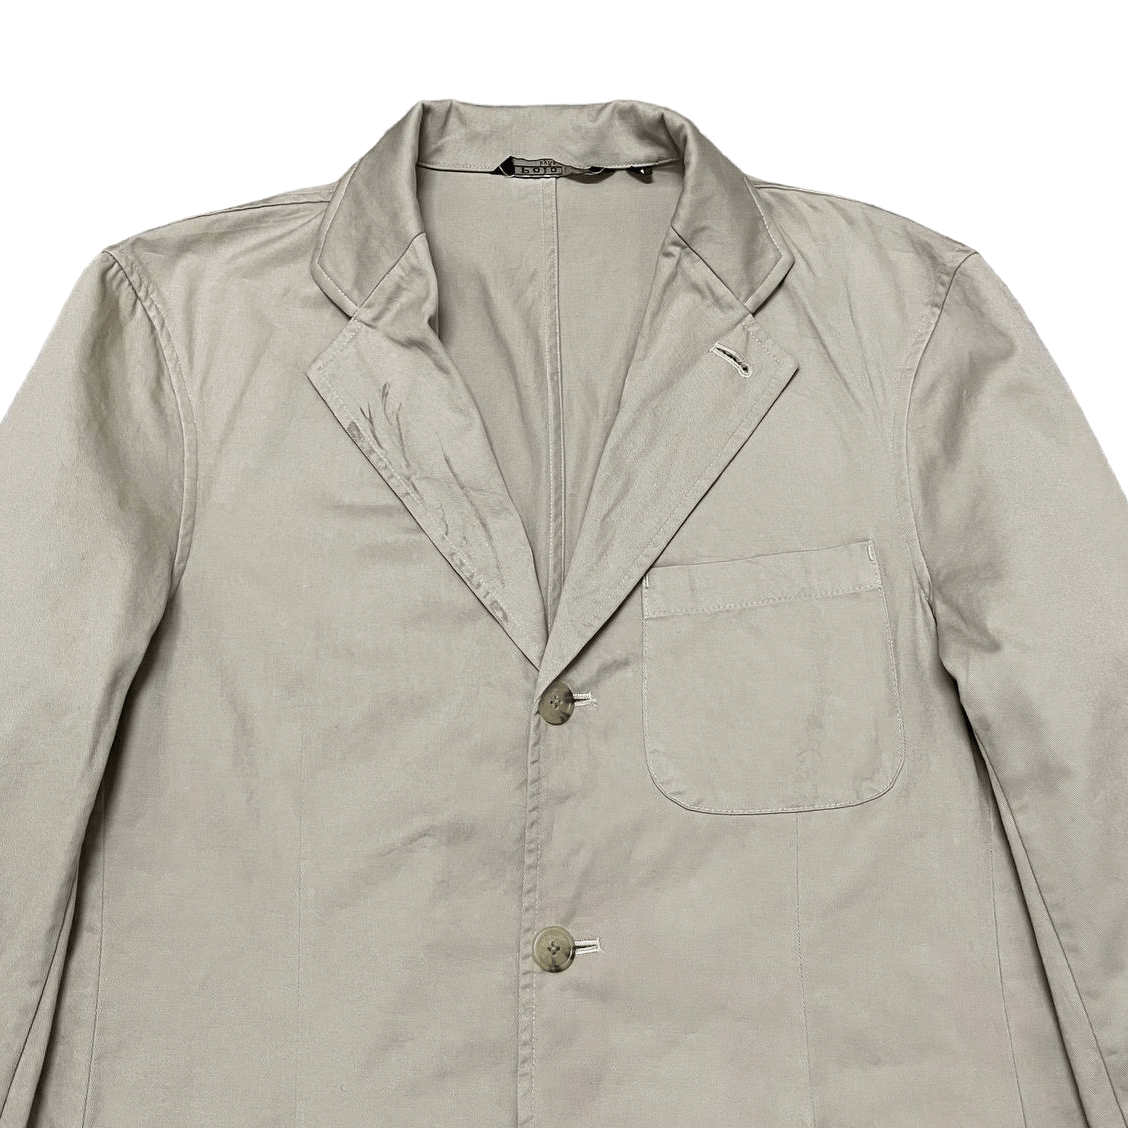 Vintage Polo Ralph Lauren Jacket - 2